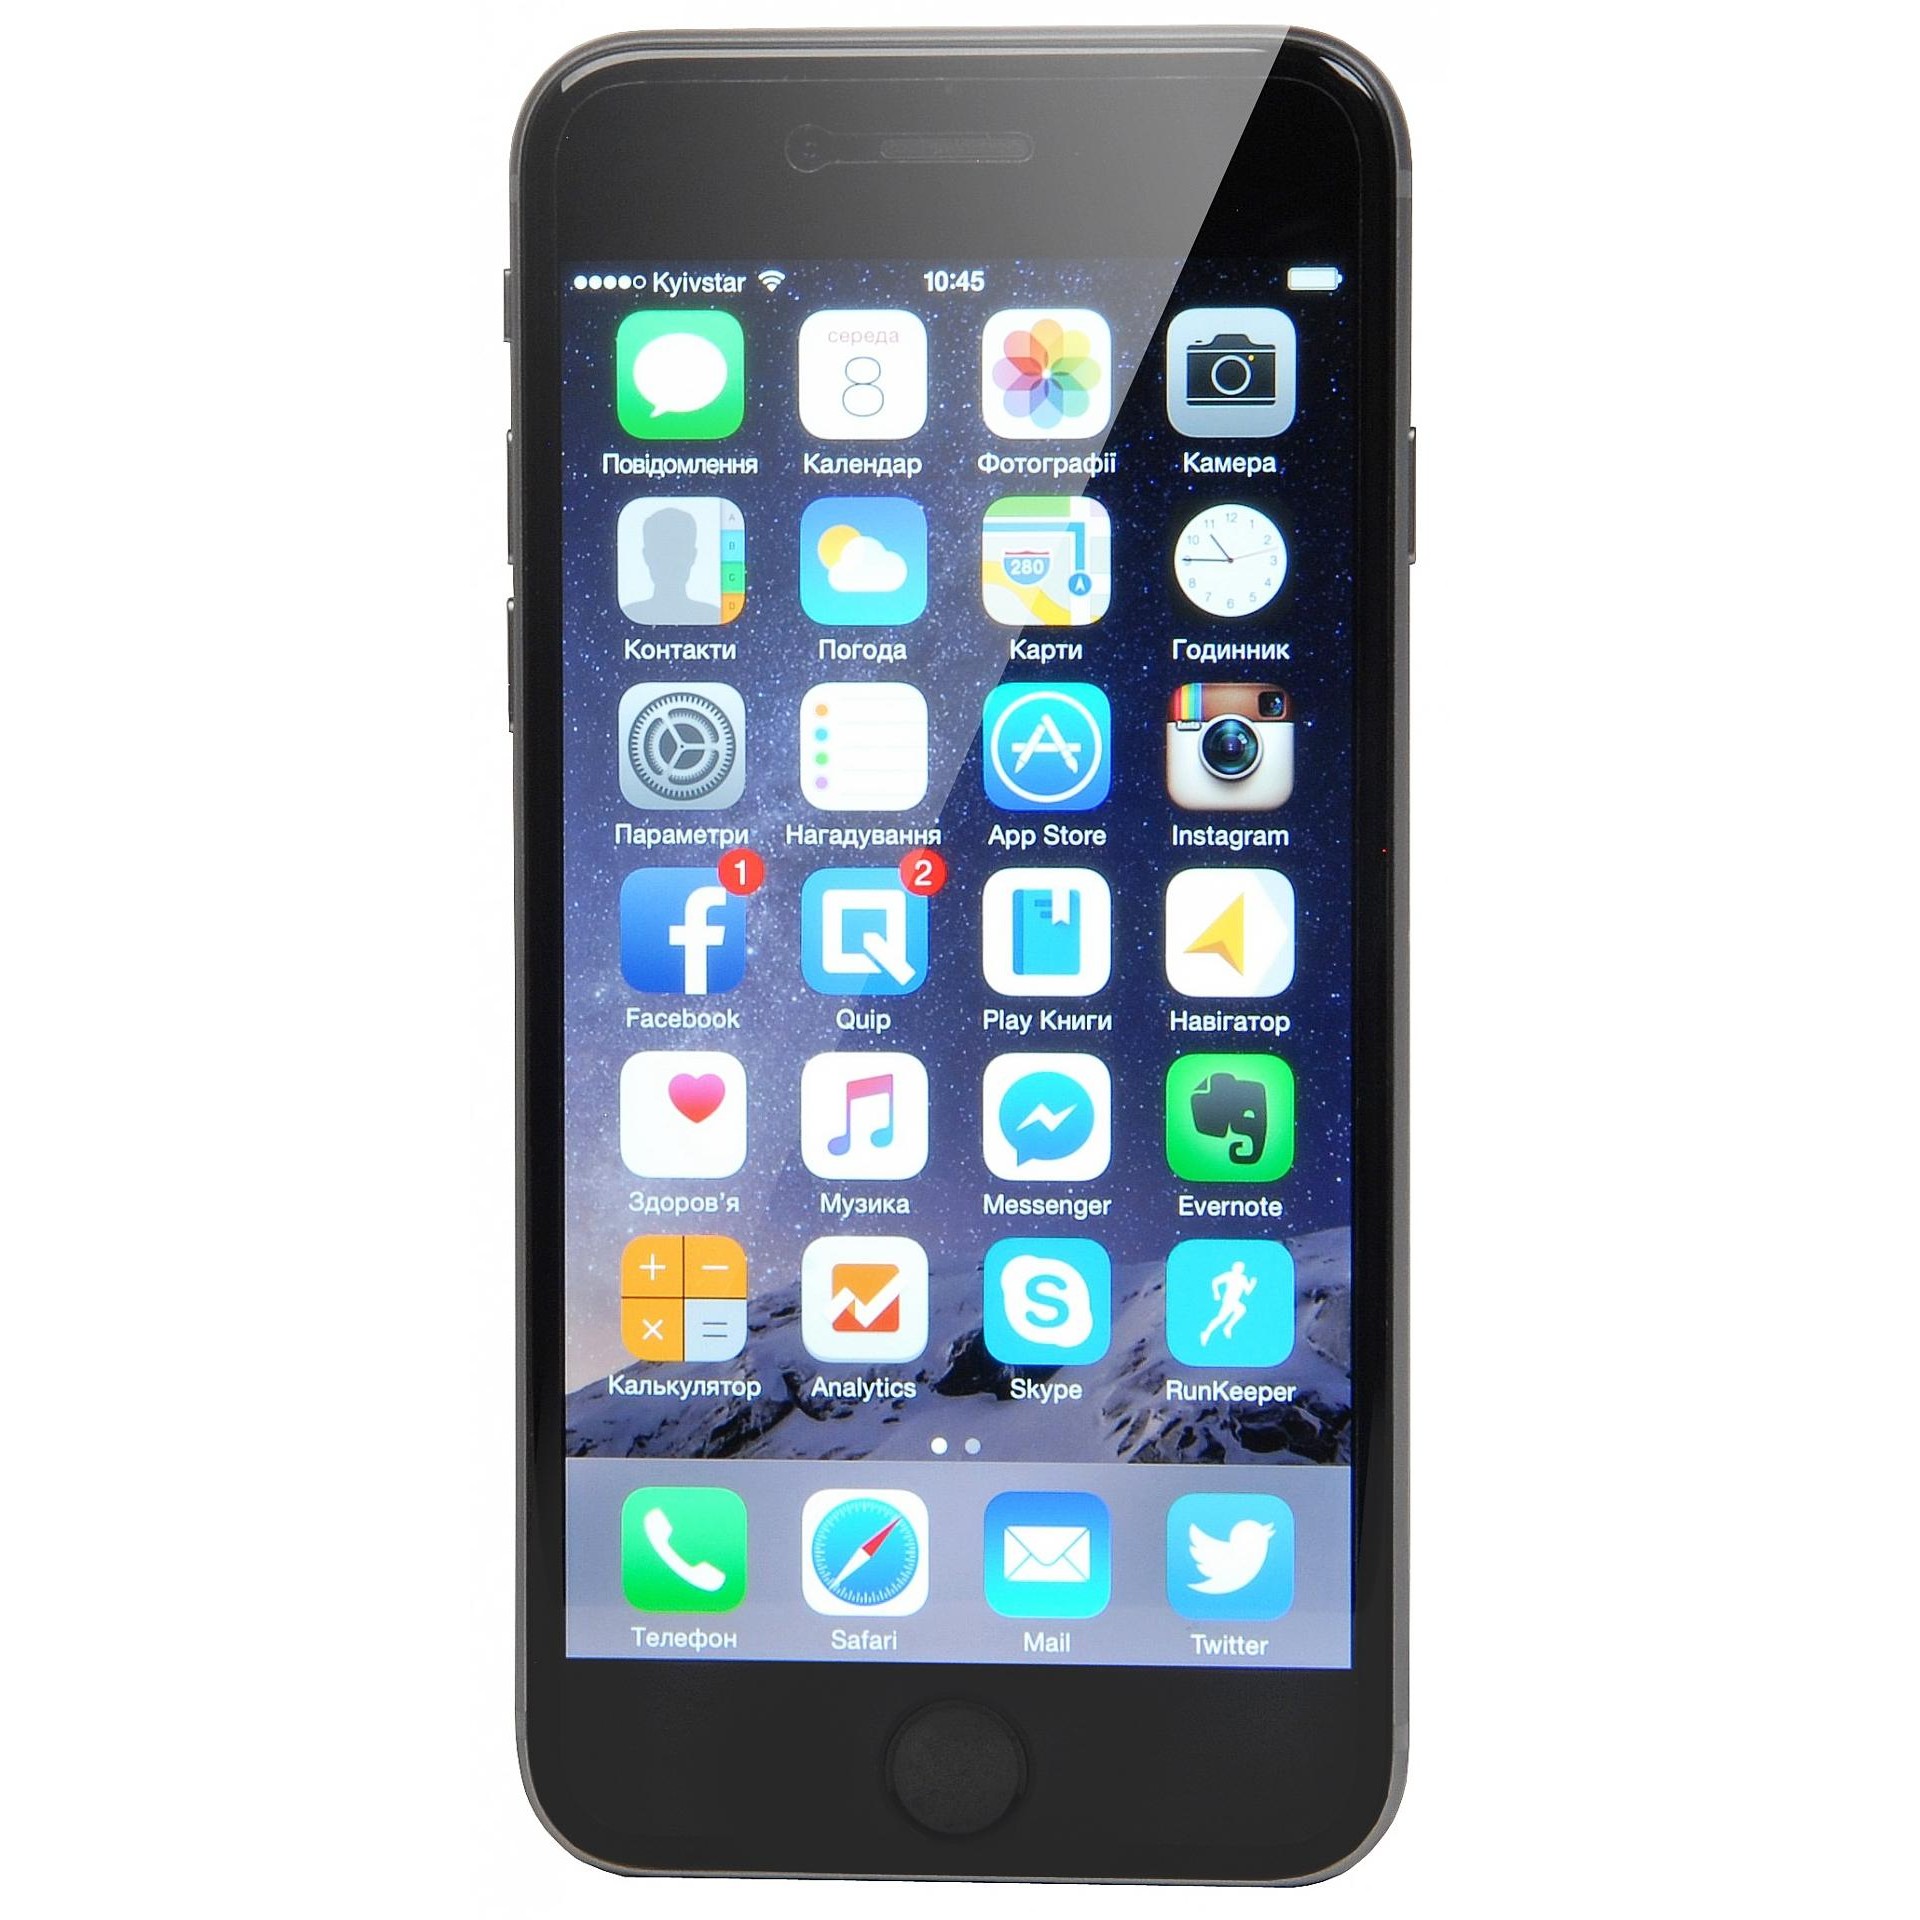 Apple iPhone 6 64GB Space Gray (MG4F2) - зображення 1